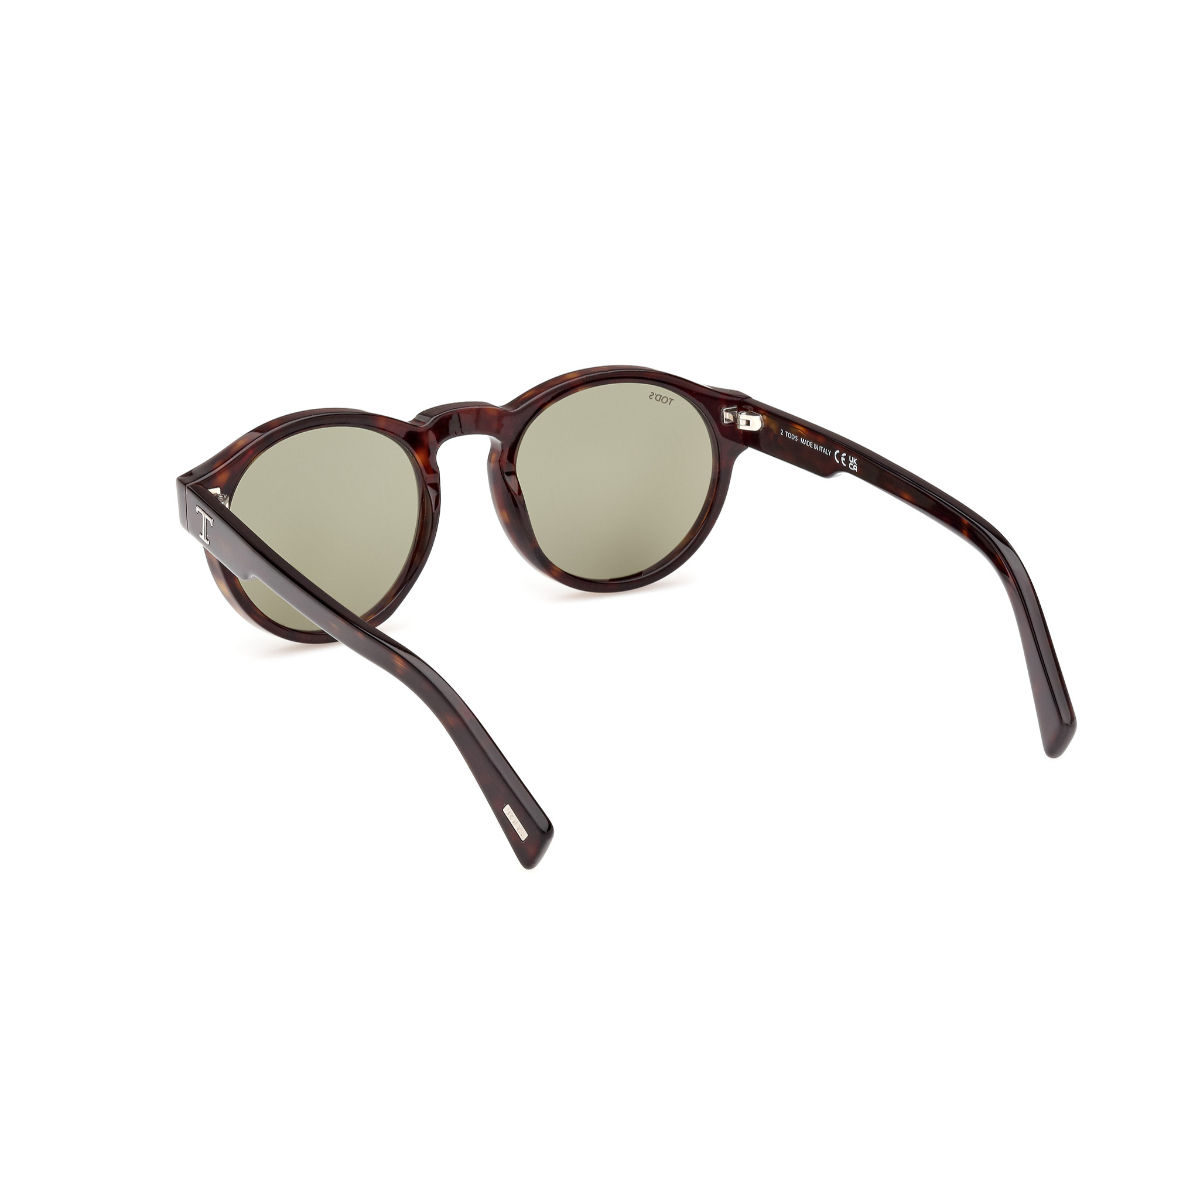 Buy TOD'S Printed Acetate Sunglasses (52) Online